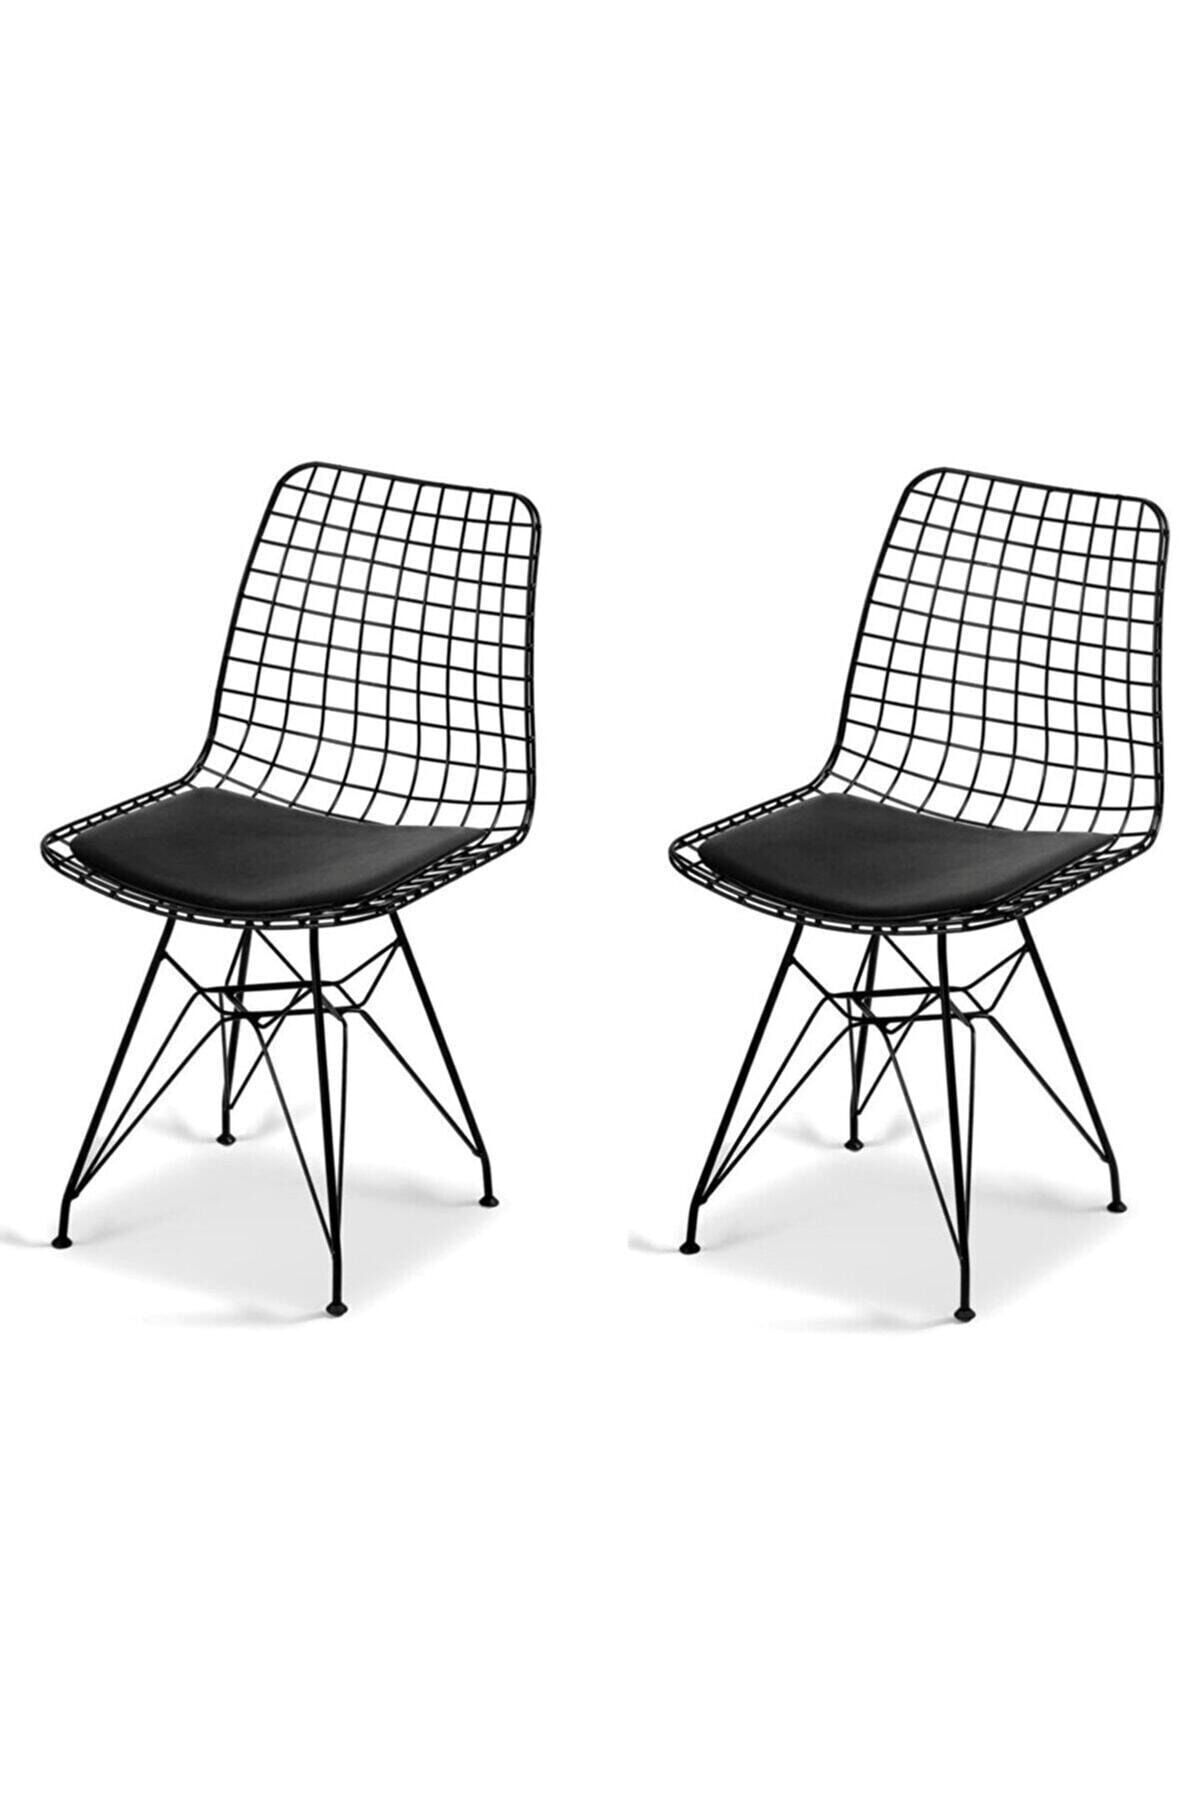 MSY TİCARET 2'li Siyah Eko Tel Sandalye-mutfak Sandalyesi-metal Sandalye-çalışma Sandalyesi-cafe &salon Sandalye